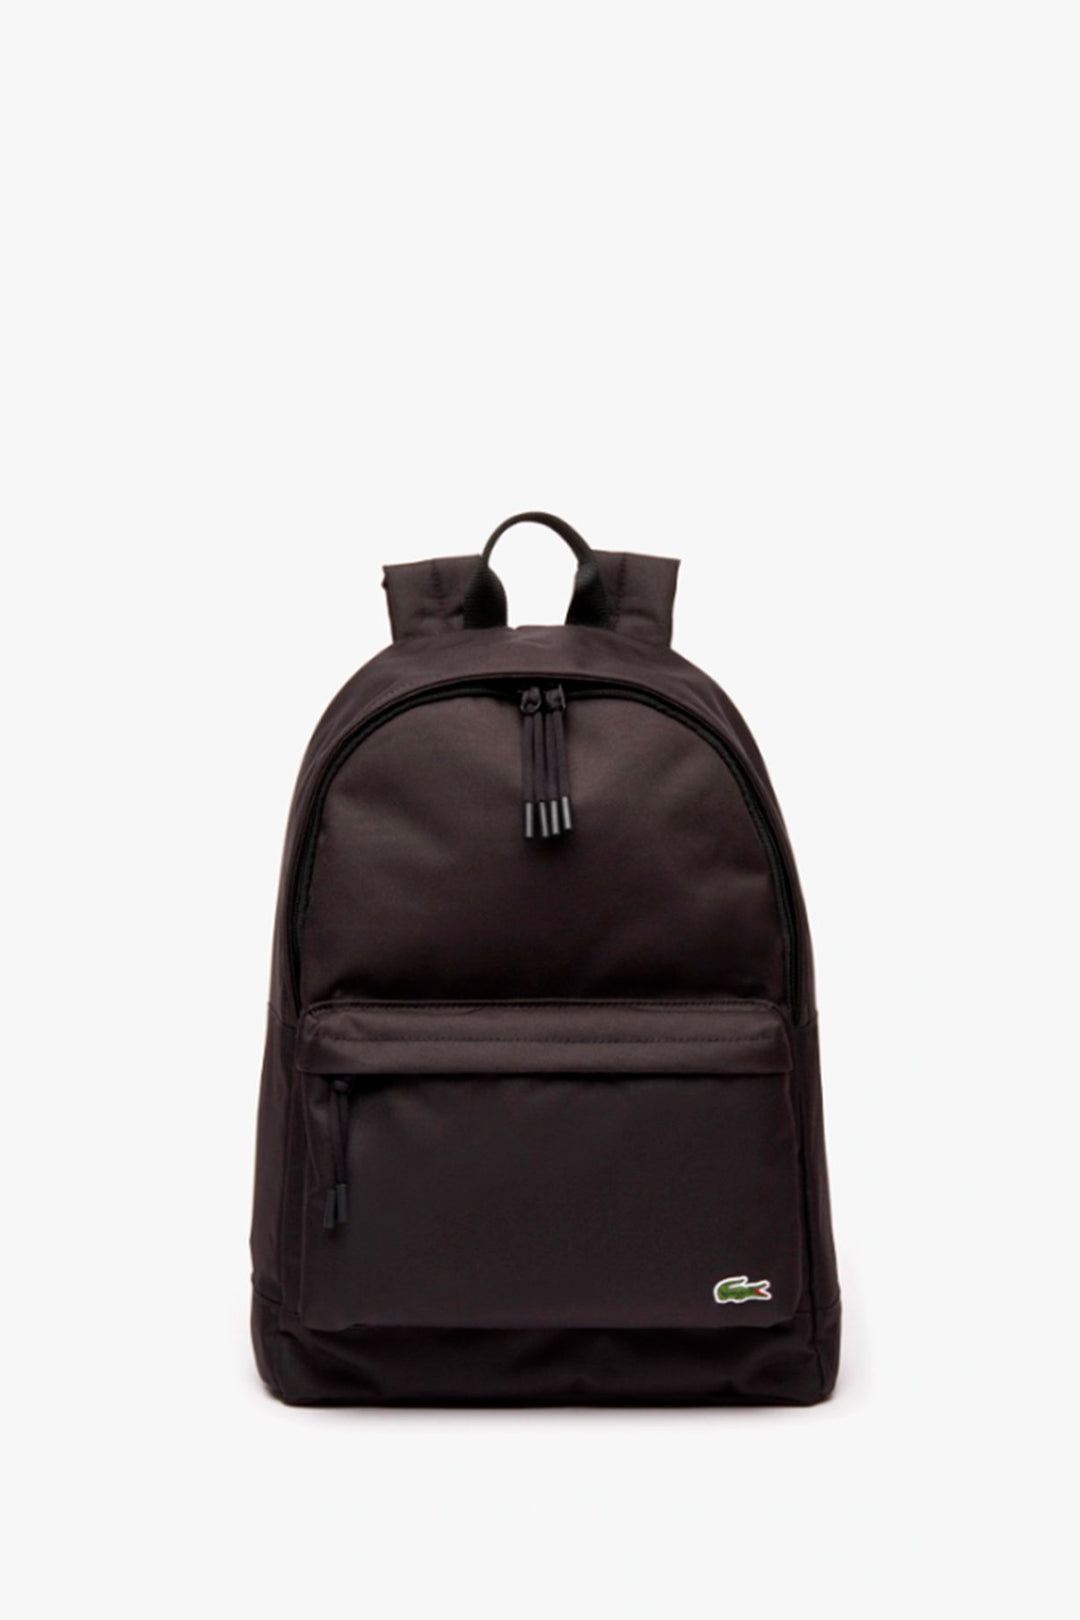 Backpack Black Lacoste (LACO-NH2677NE)